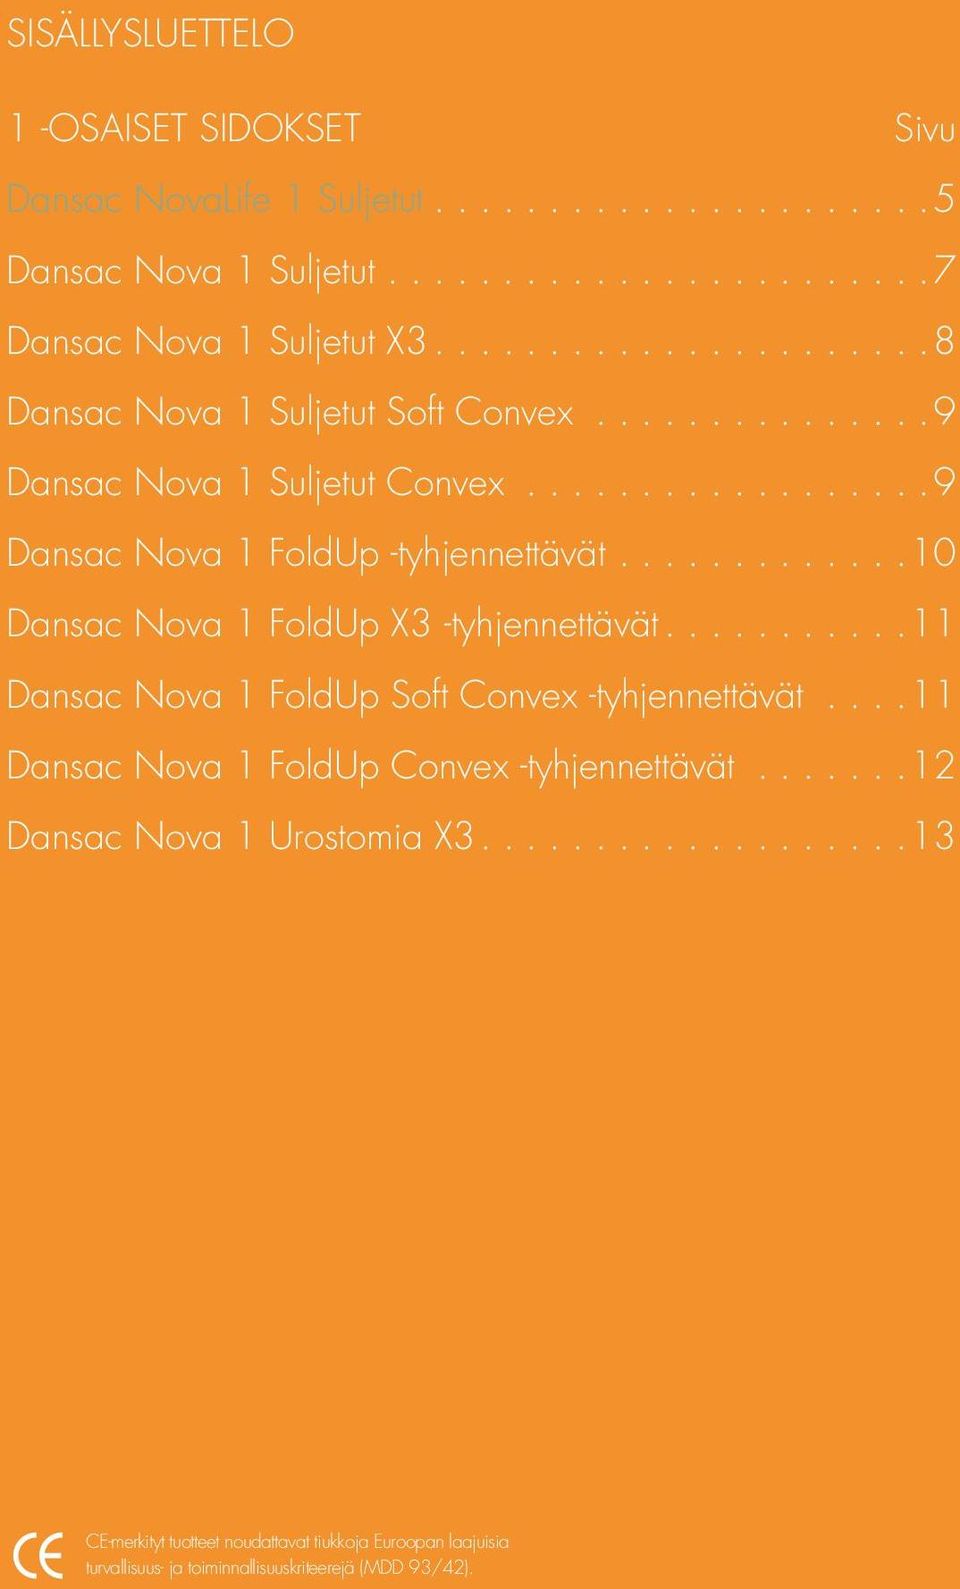 ..10 Dansac Nova 1 FoldUp X3 -tyhjennettävät...11 Dansac Nova 1 FoldUp Soft Convex -tyhjennettävät.